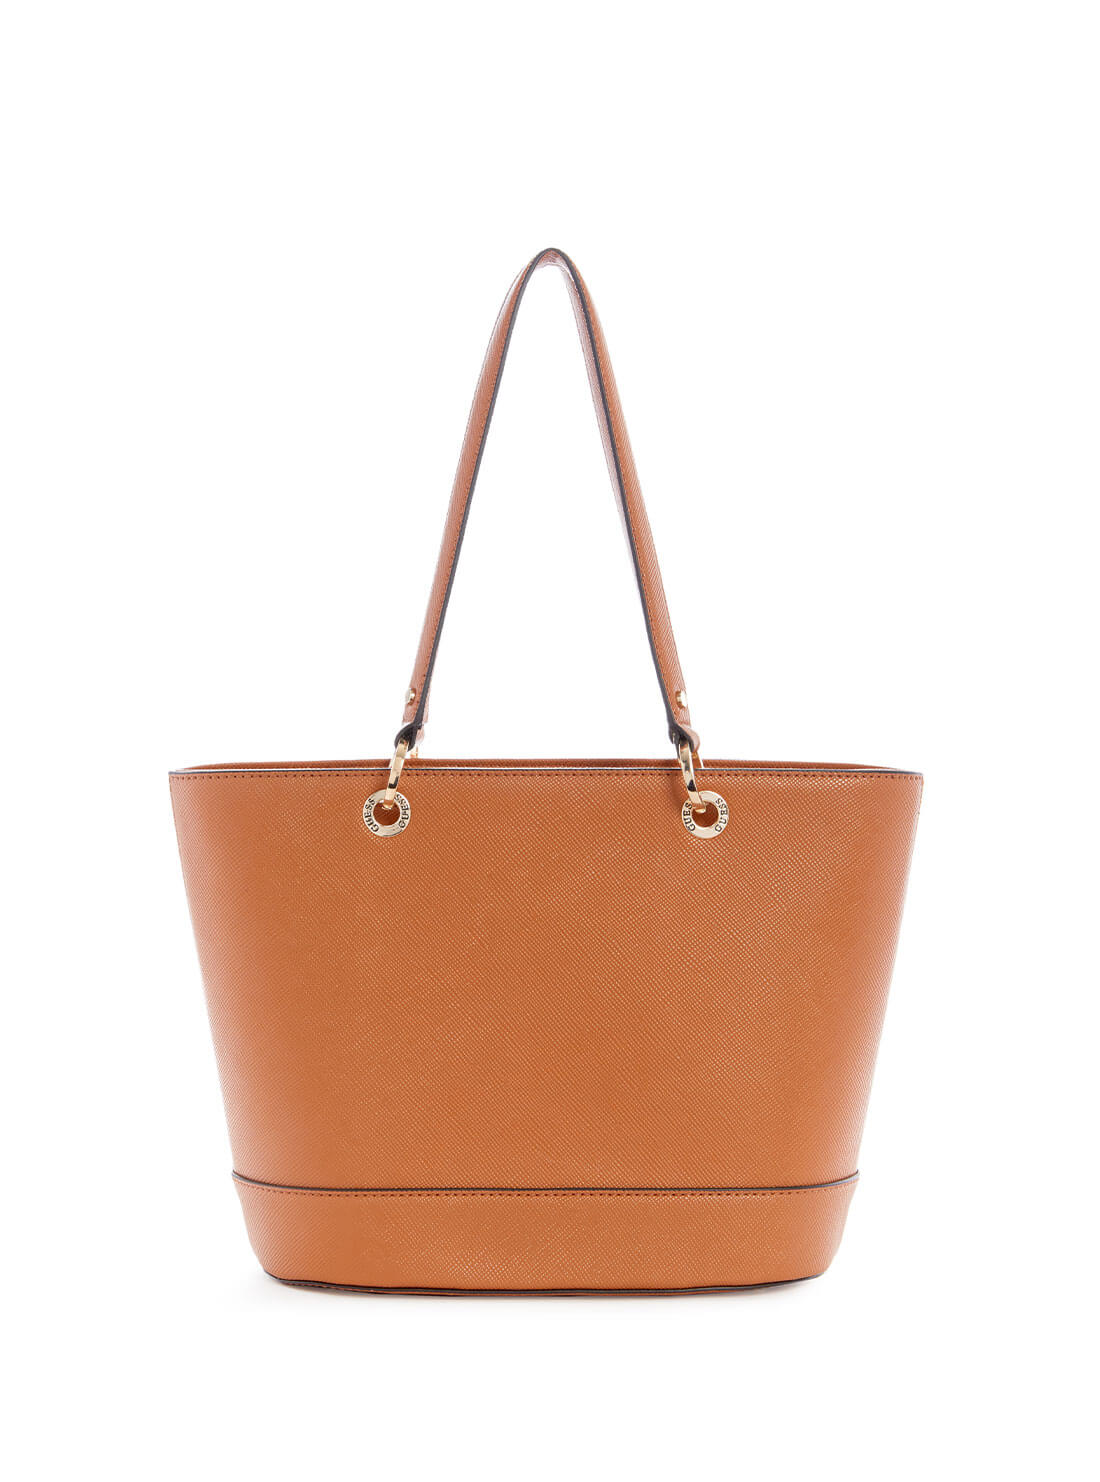 Cognac Brown Noelle Small Elite Tote Bag | GUESS Women's Handbags | back view